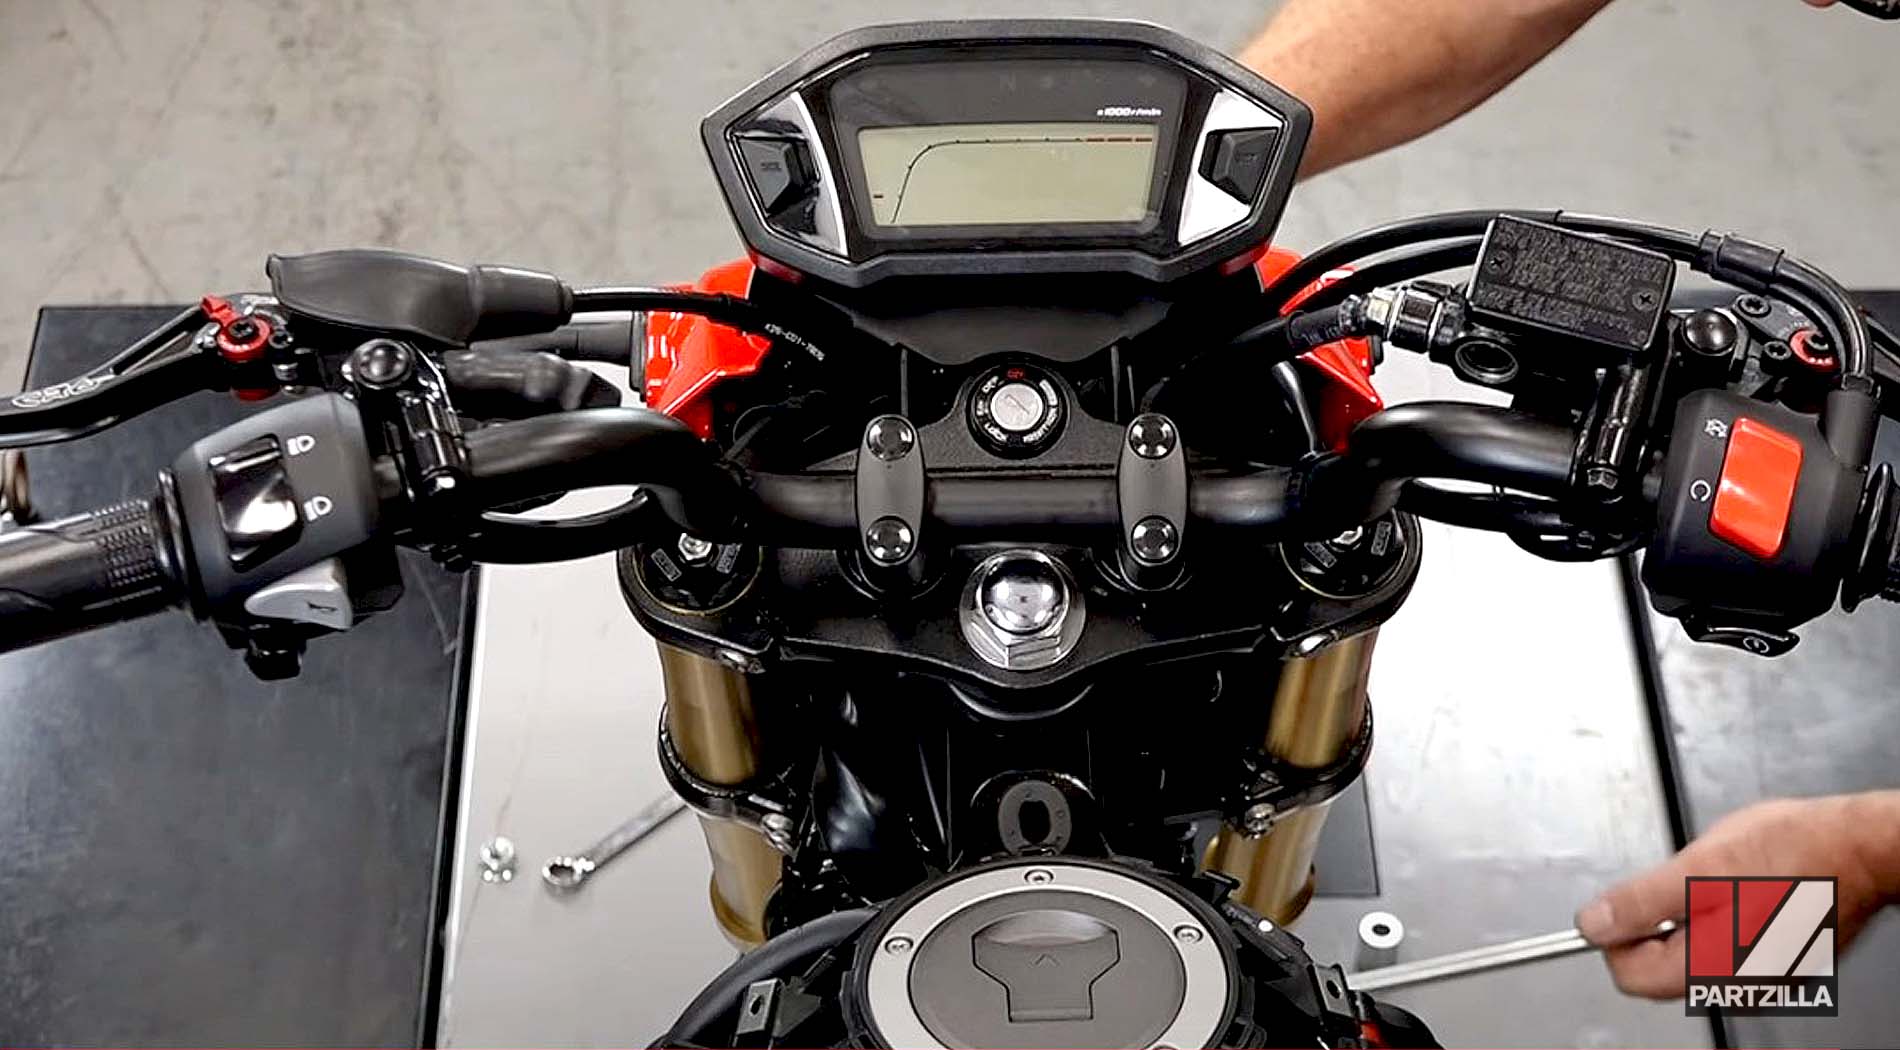 Honda Grom motorcycle aftermarket suspension upgrades